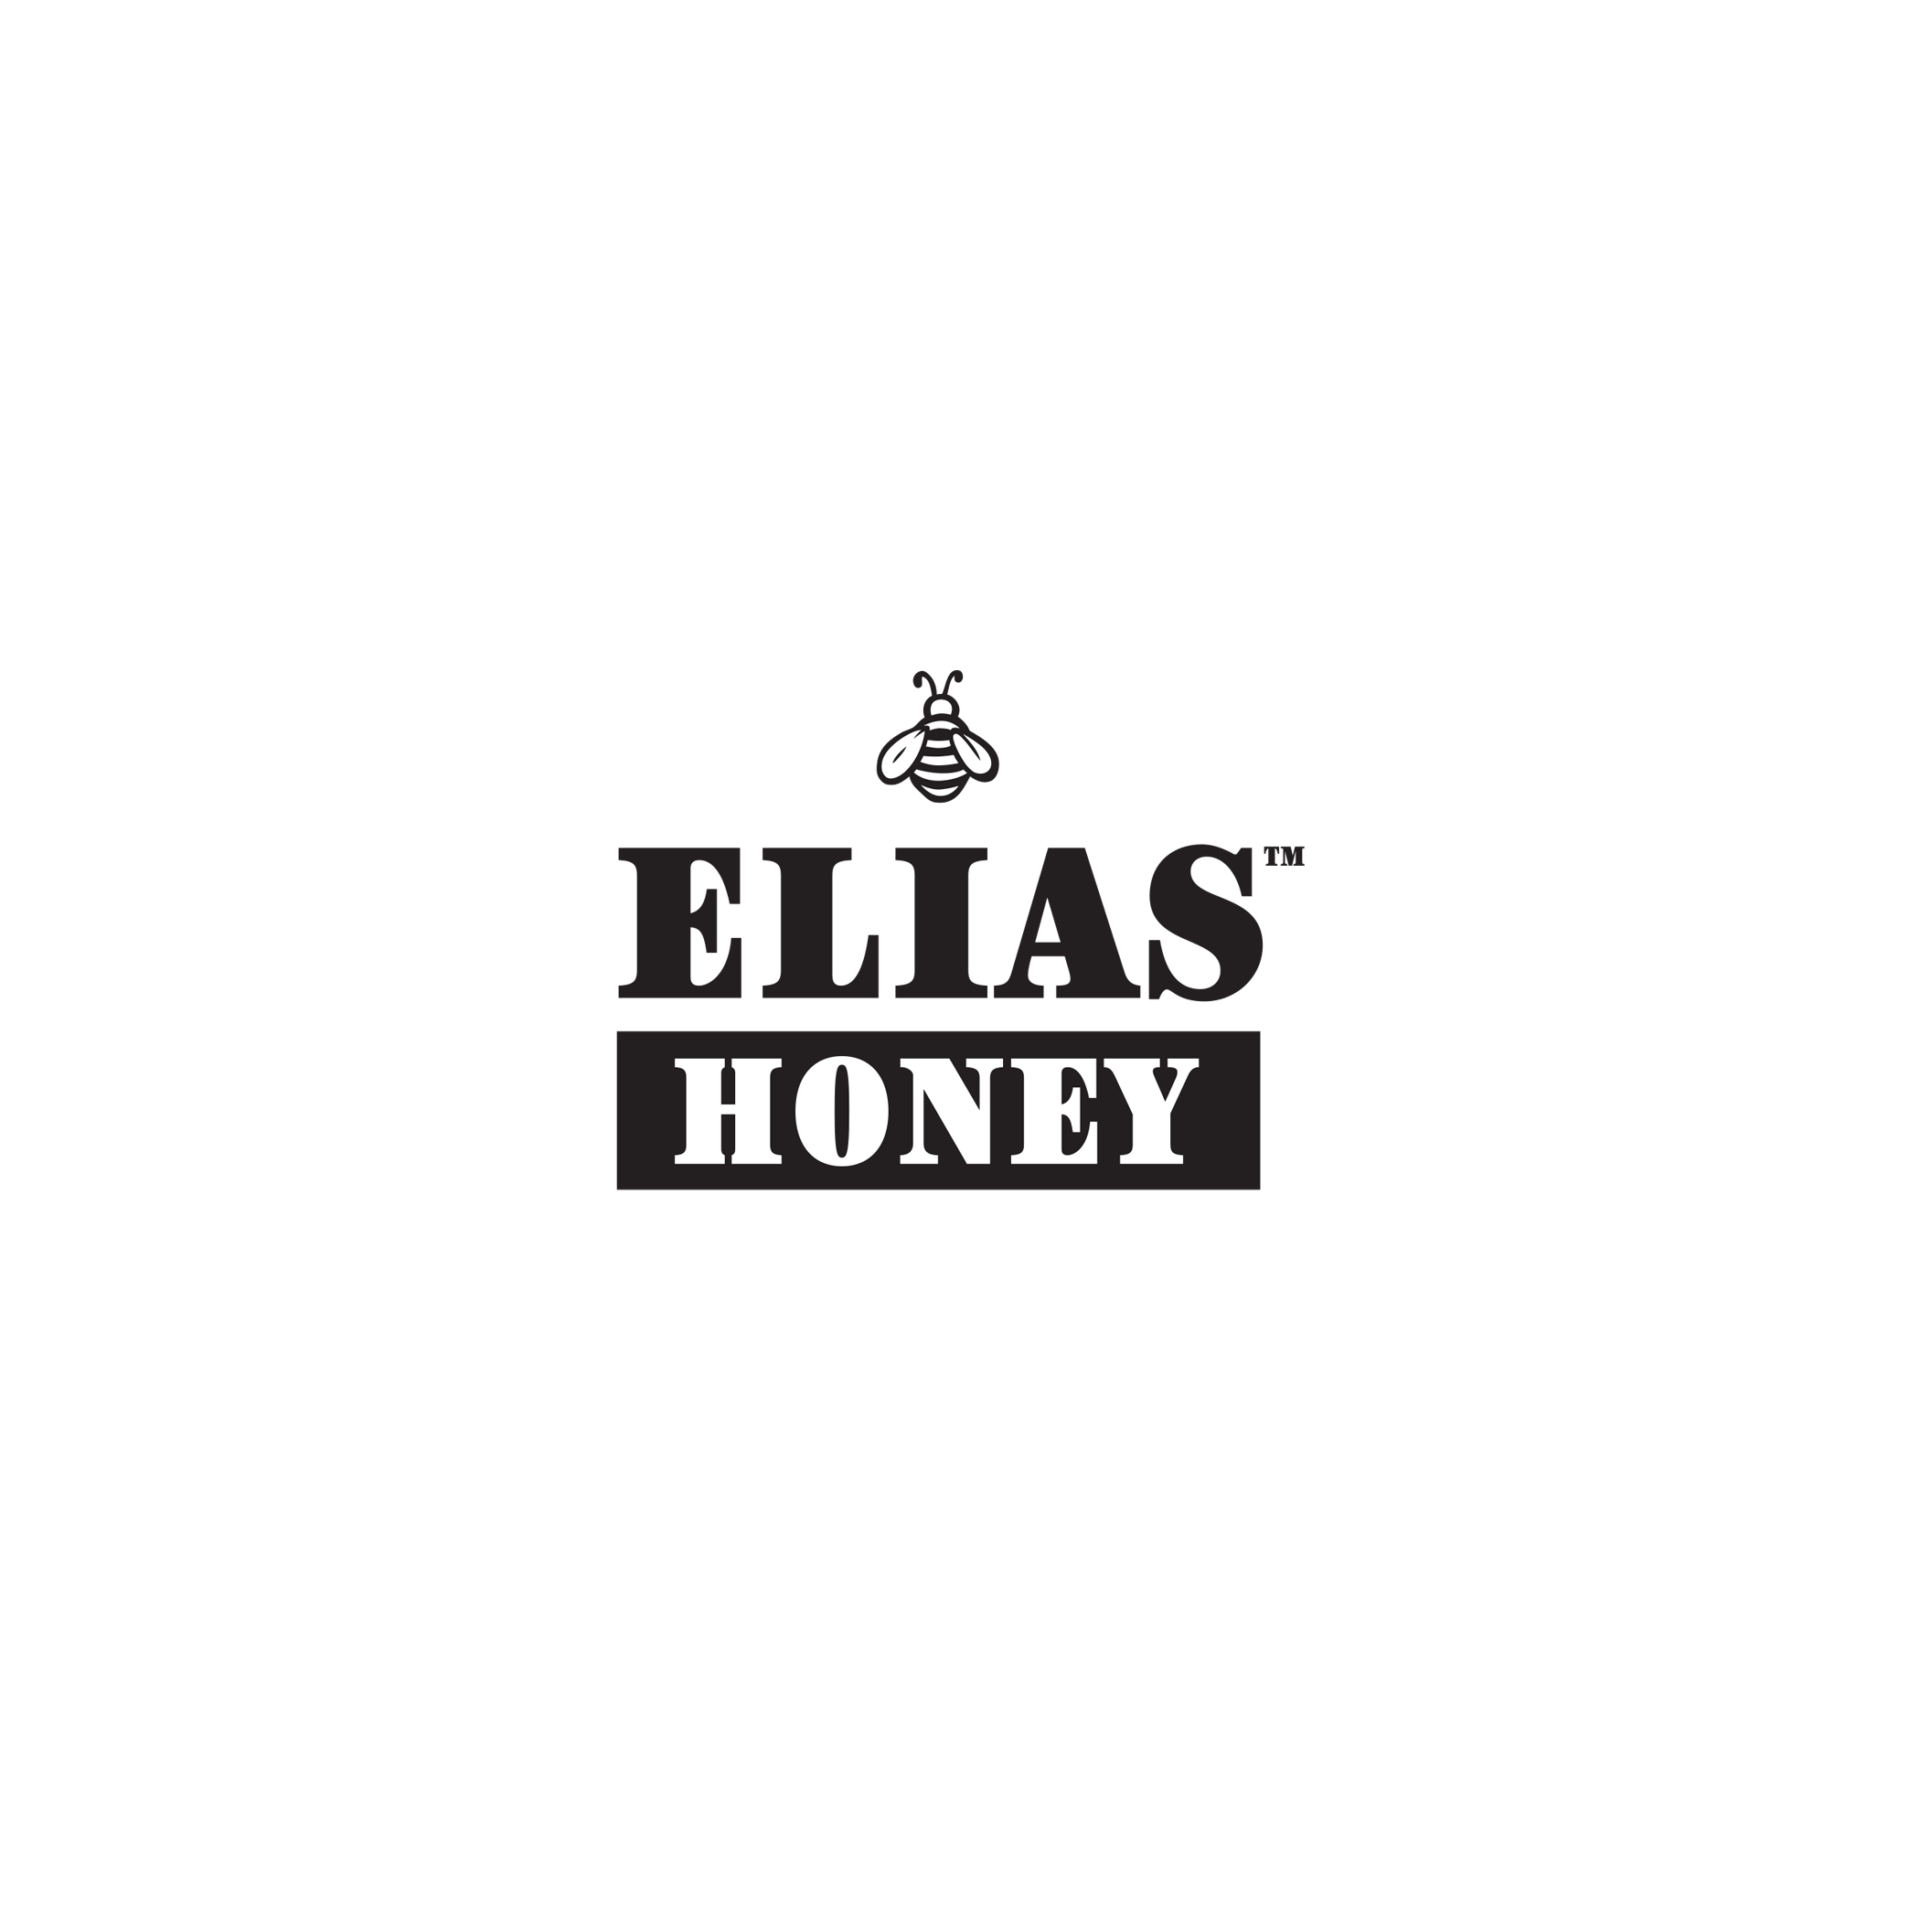 Elias Honey Logo Black and White